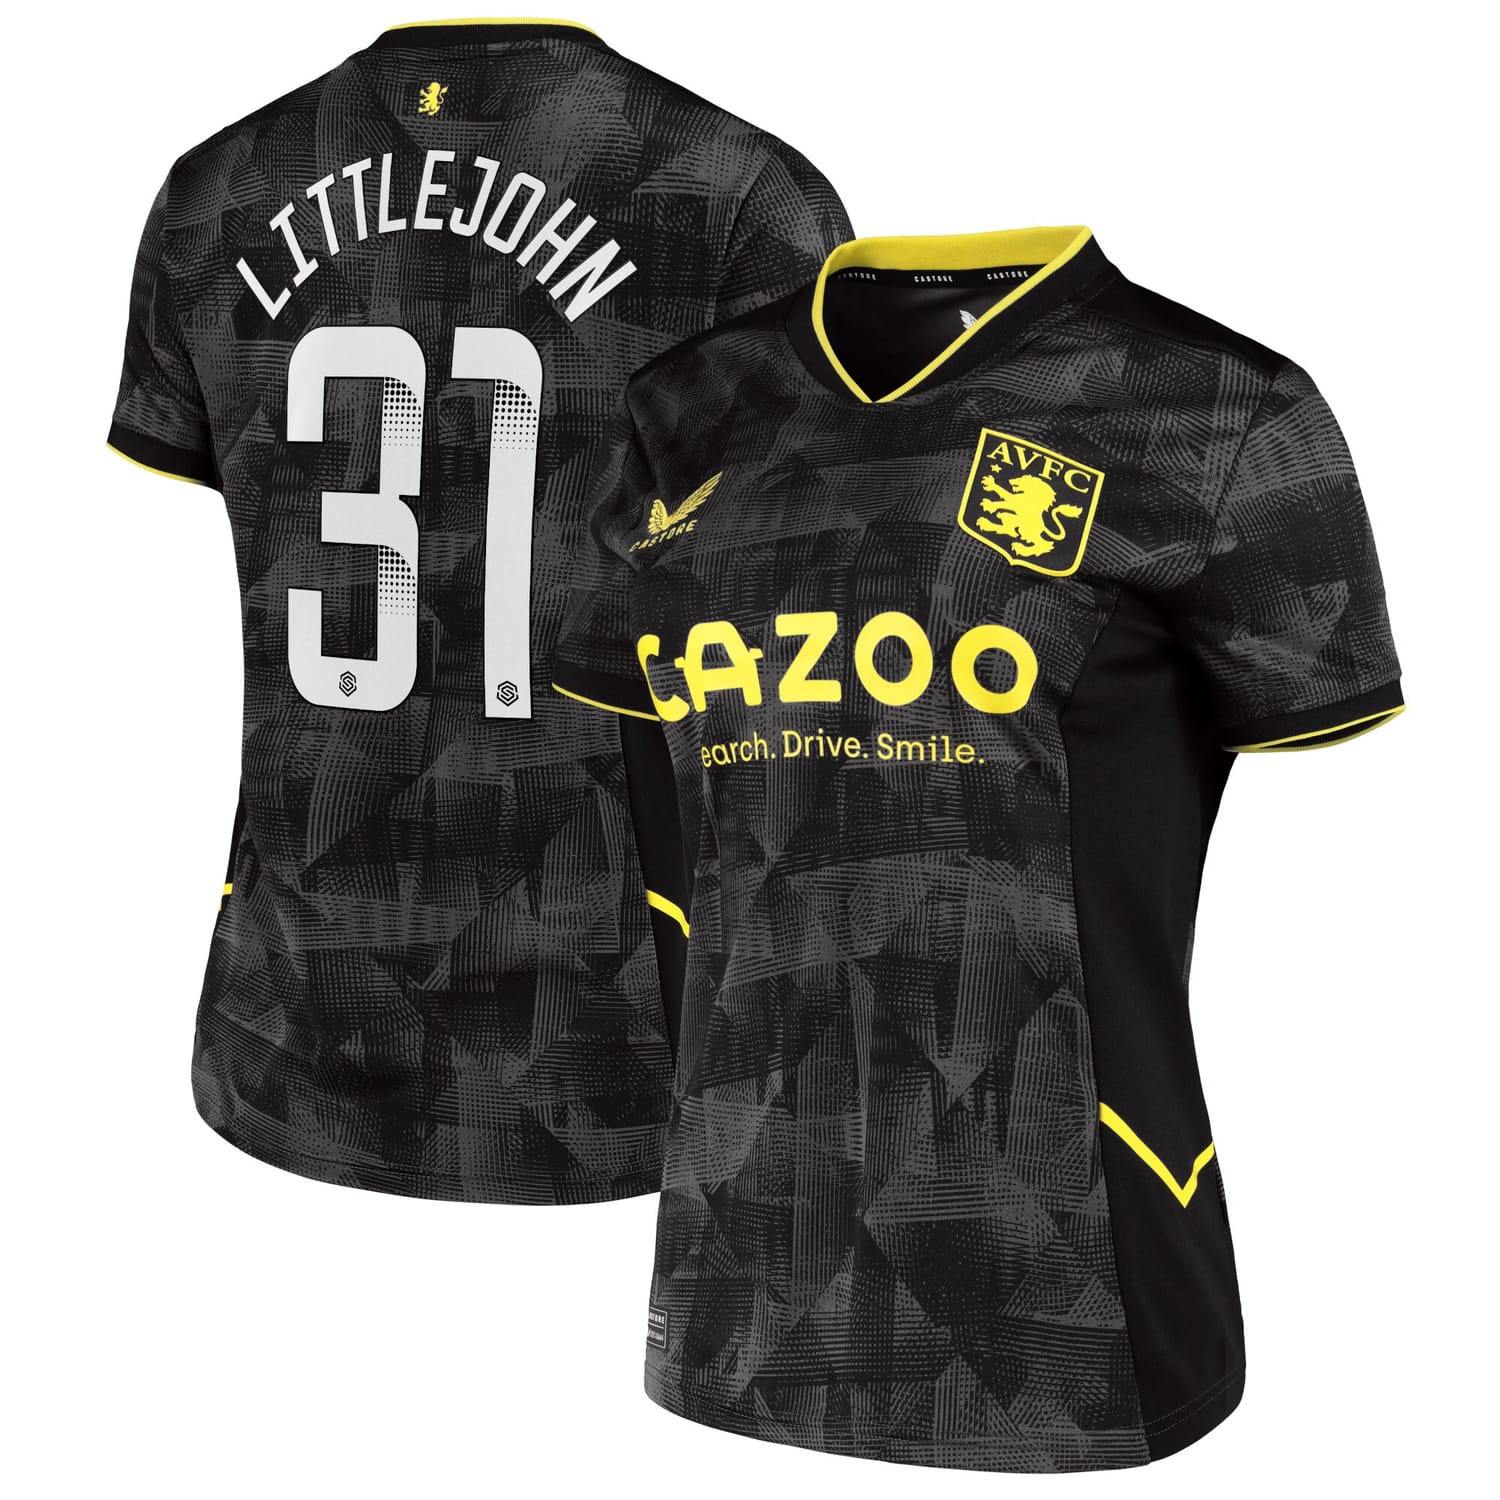 Premier League Aston Villa Third WSL Jersey Shirt 2022-23 player Ruesha Littlejohn 31 printing for Women